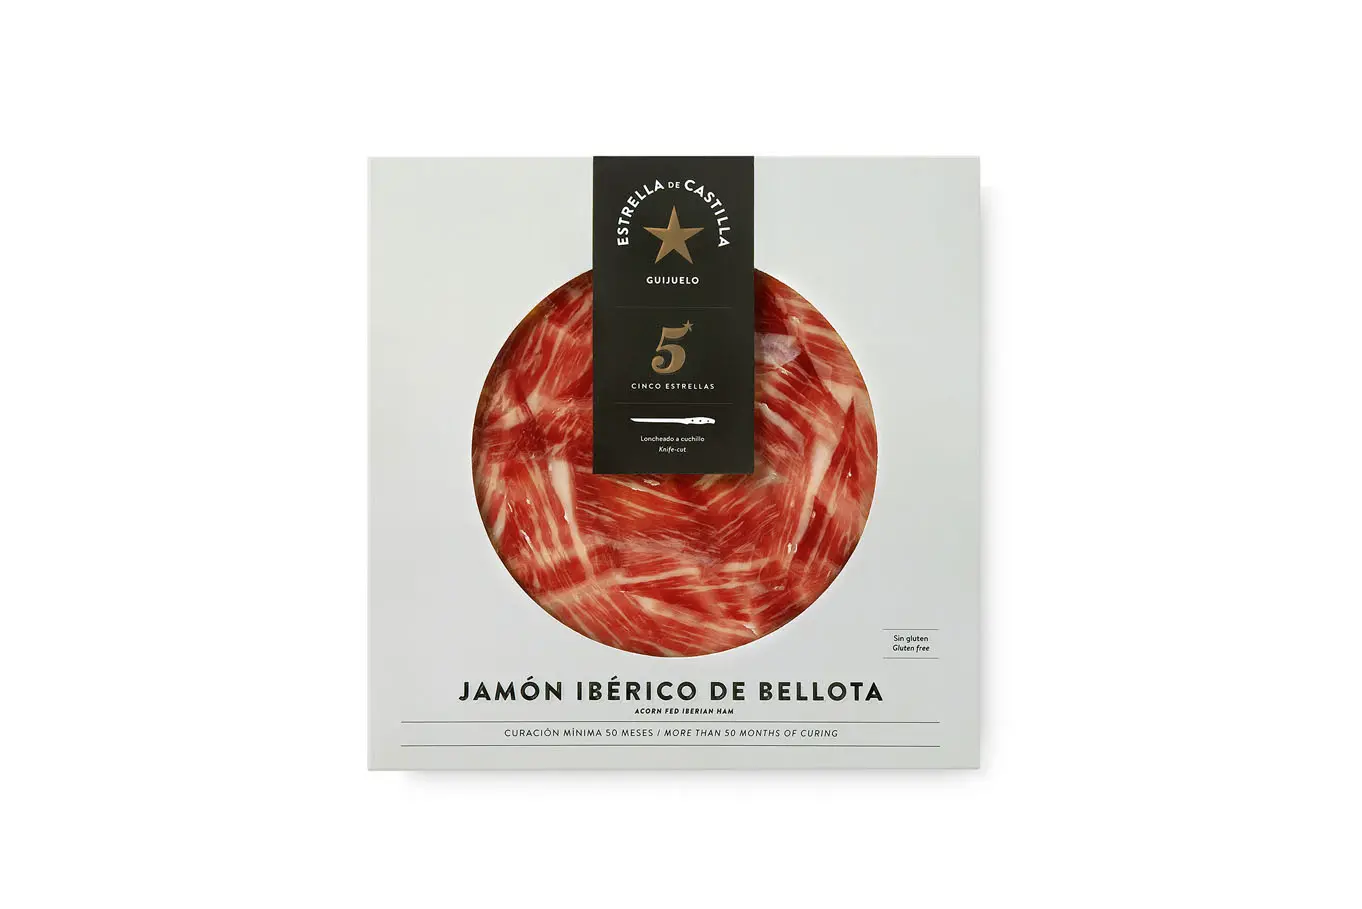 Productos Ibericos Calderon y Ramos Jamon iberico de bellotaloncheado.webp